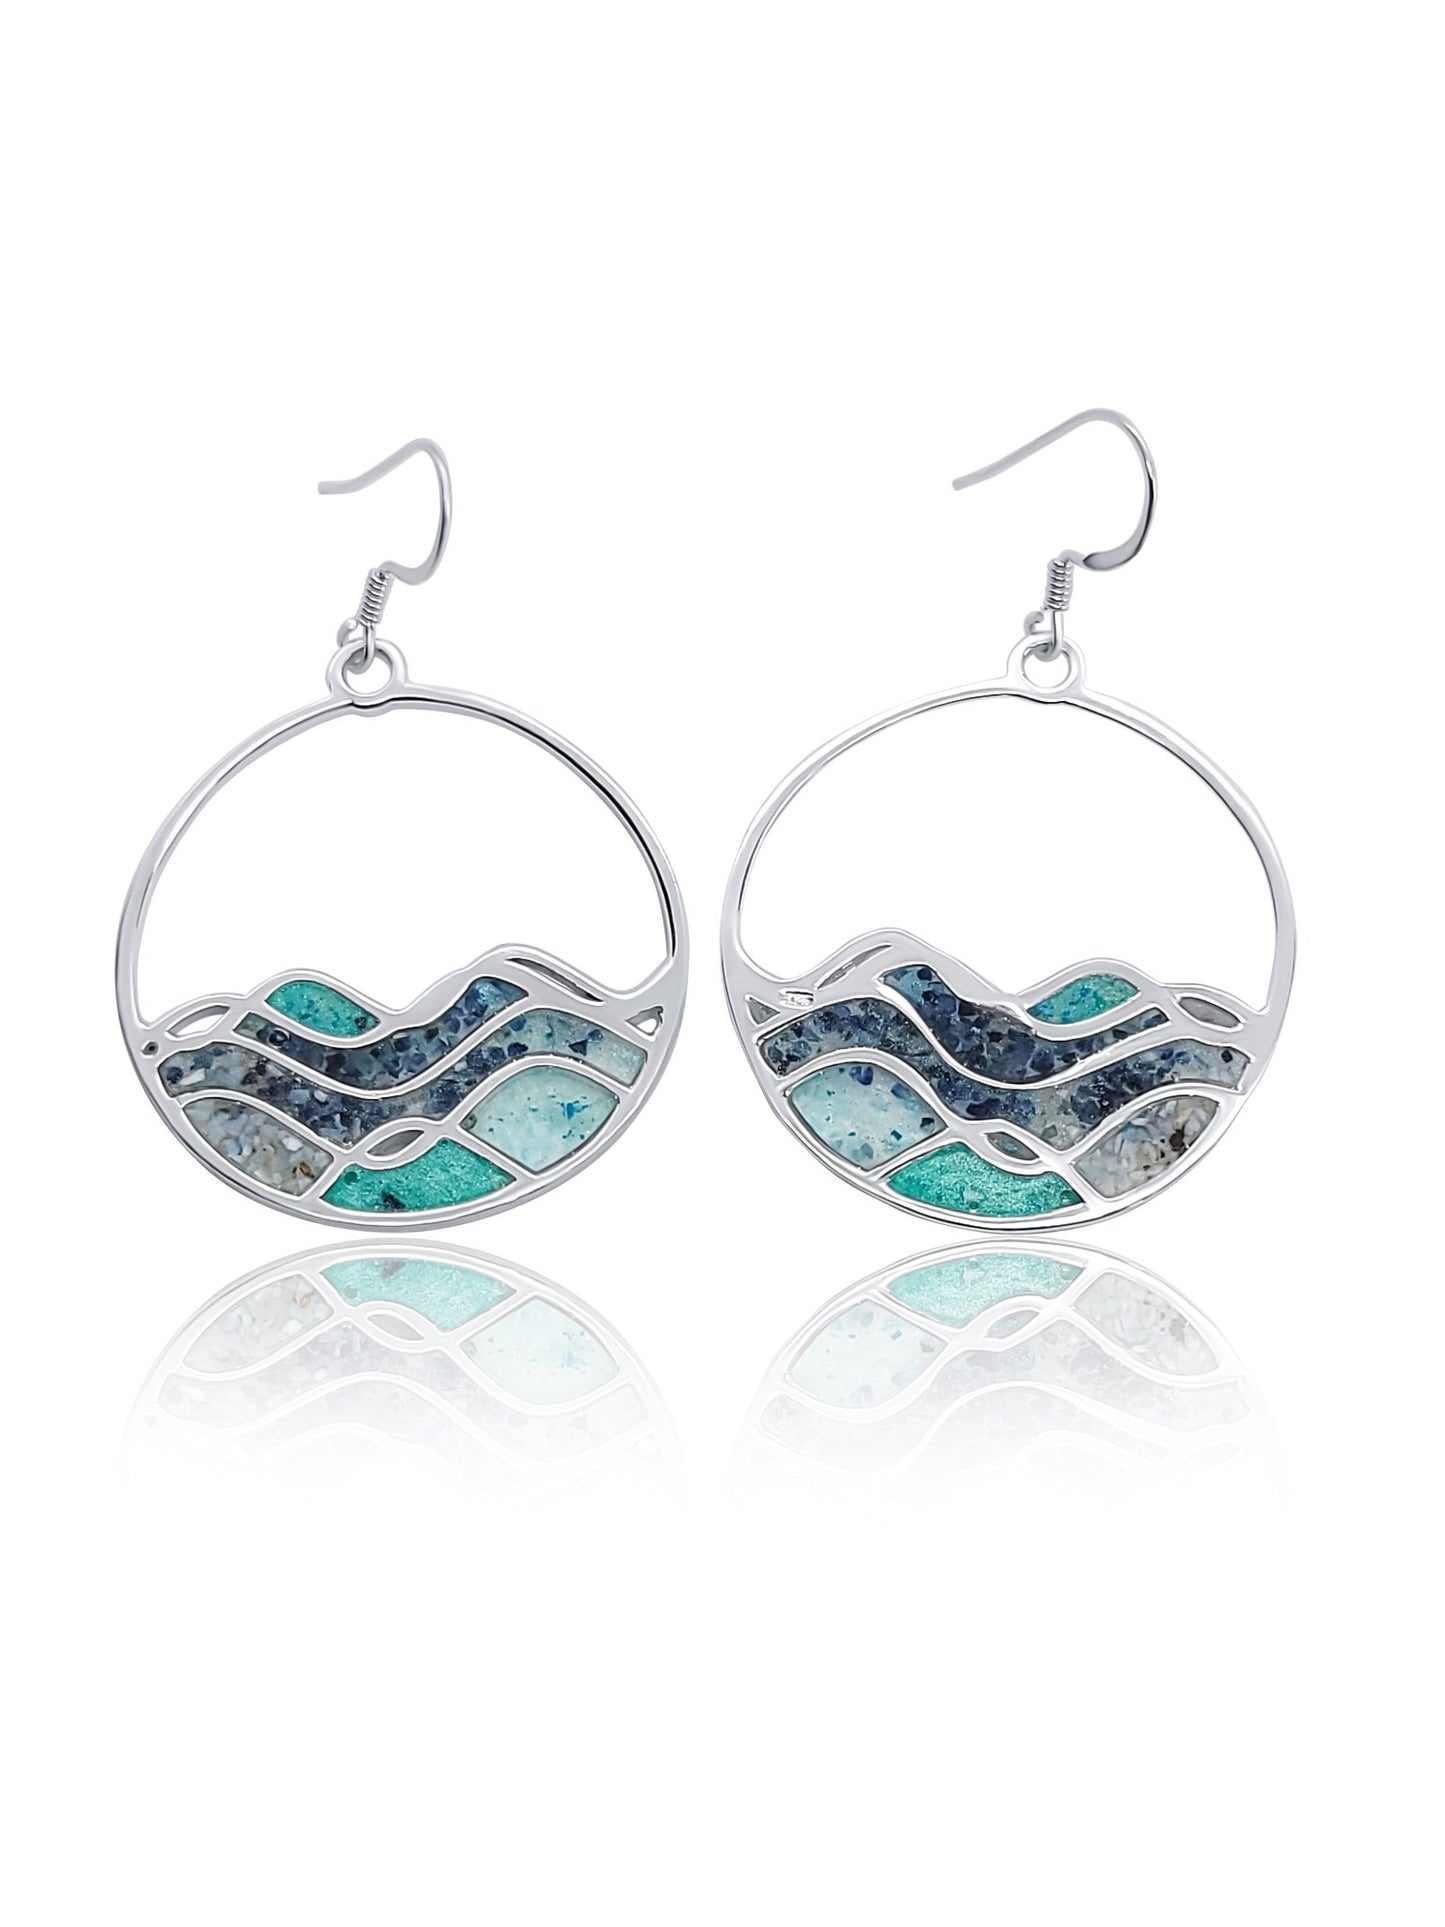 High Tide Blue Ocean CircleEarrings- Captivating Ocean Inspired Jewelry